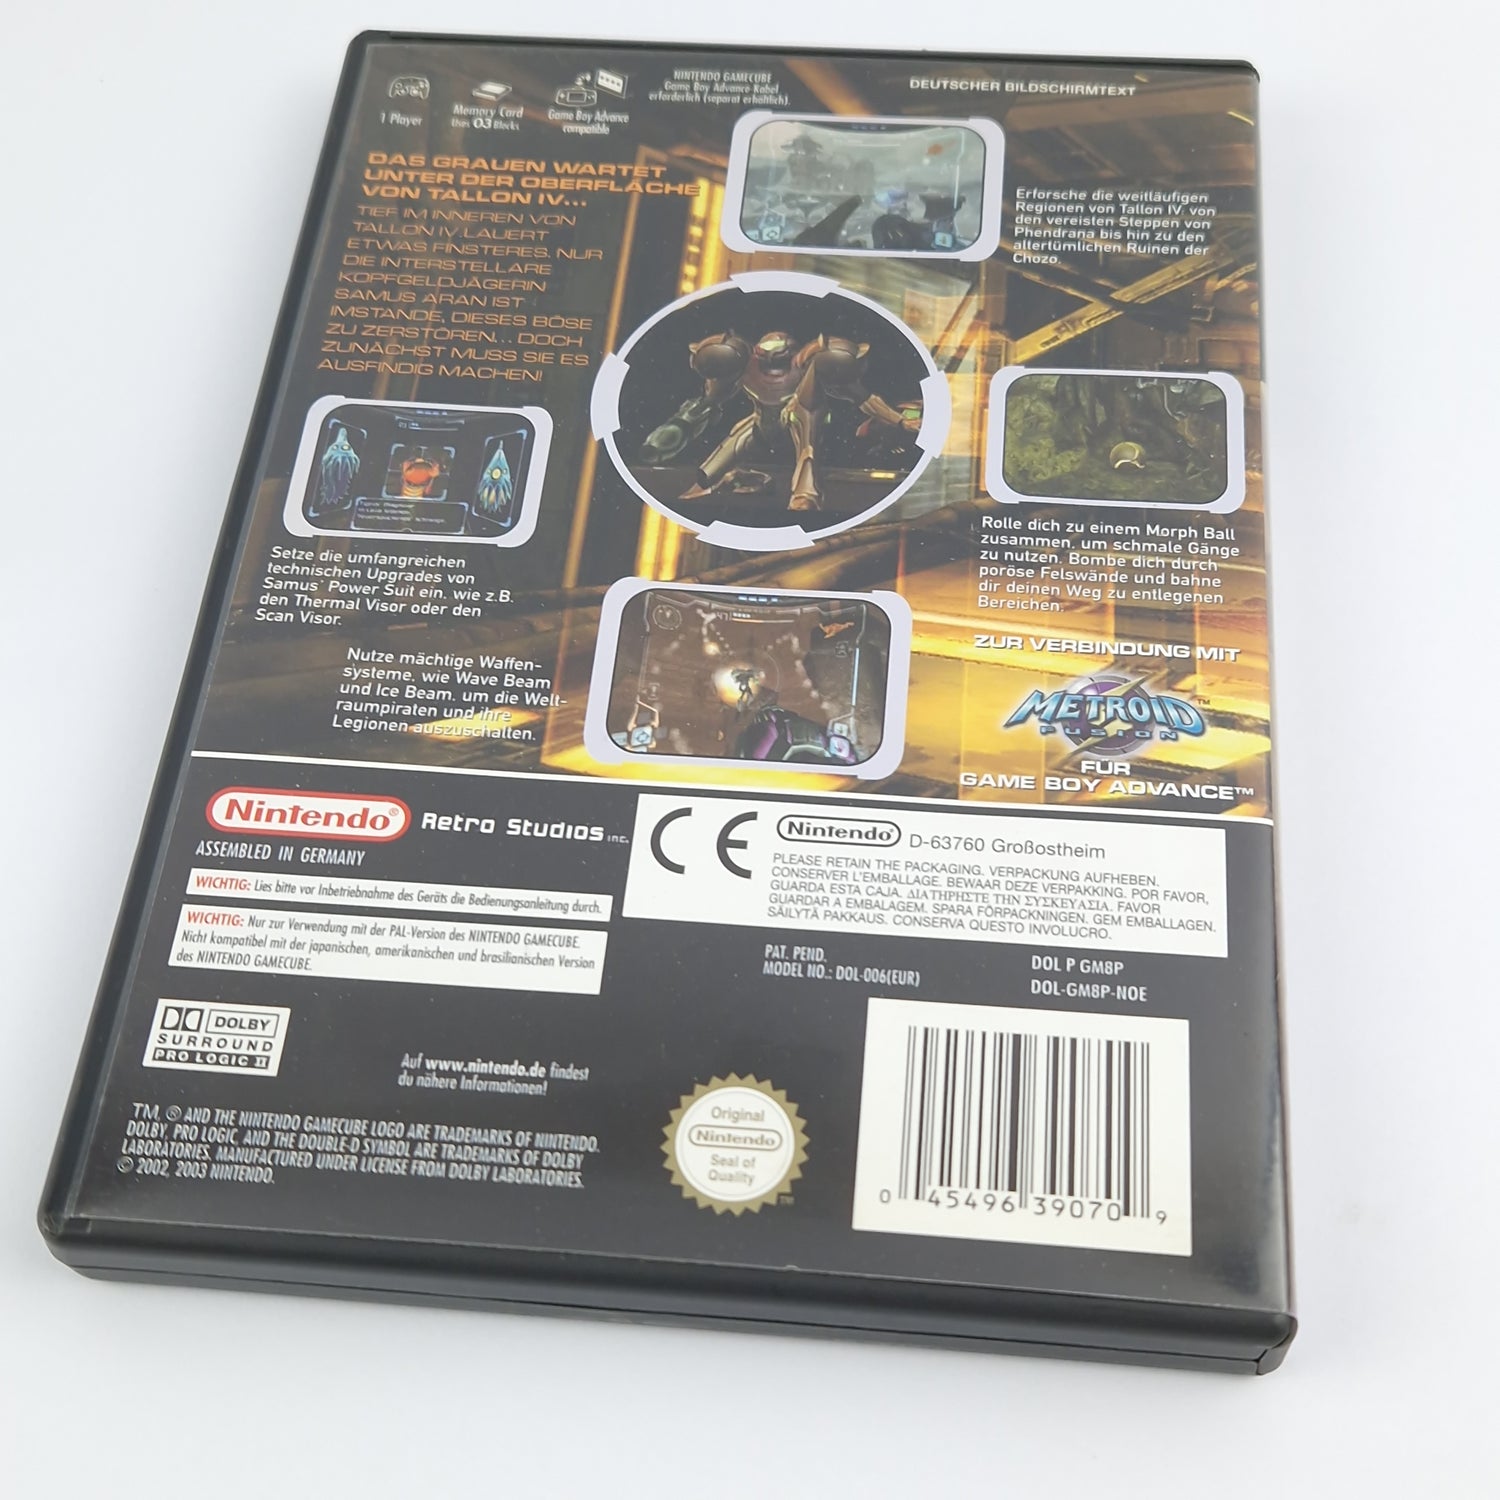 Nintendo Gamecube game: Metroid Prime + Cheat Pro booklet / solution book